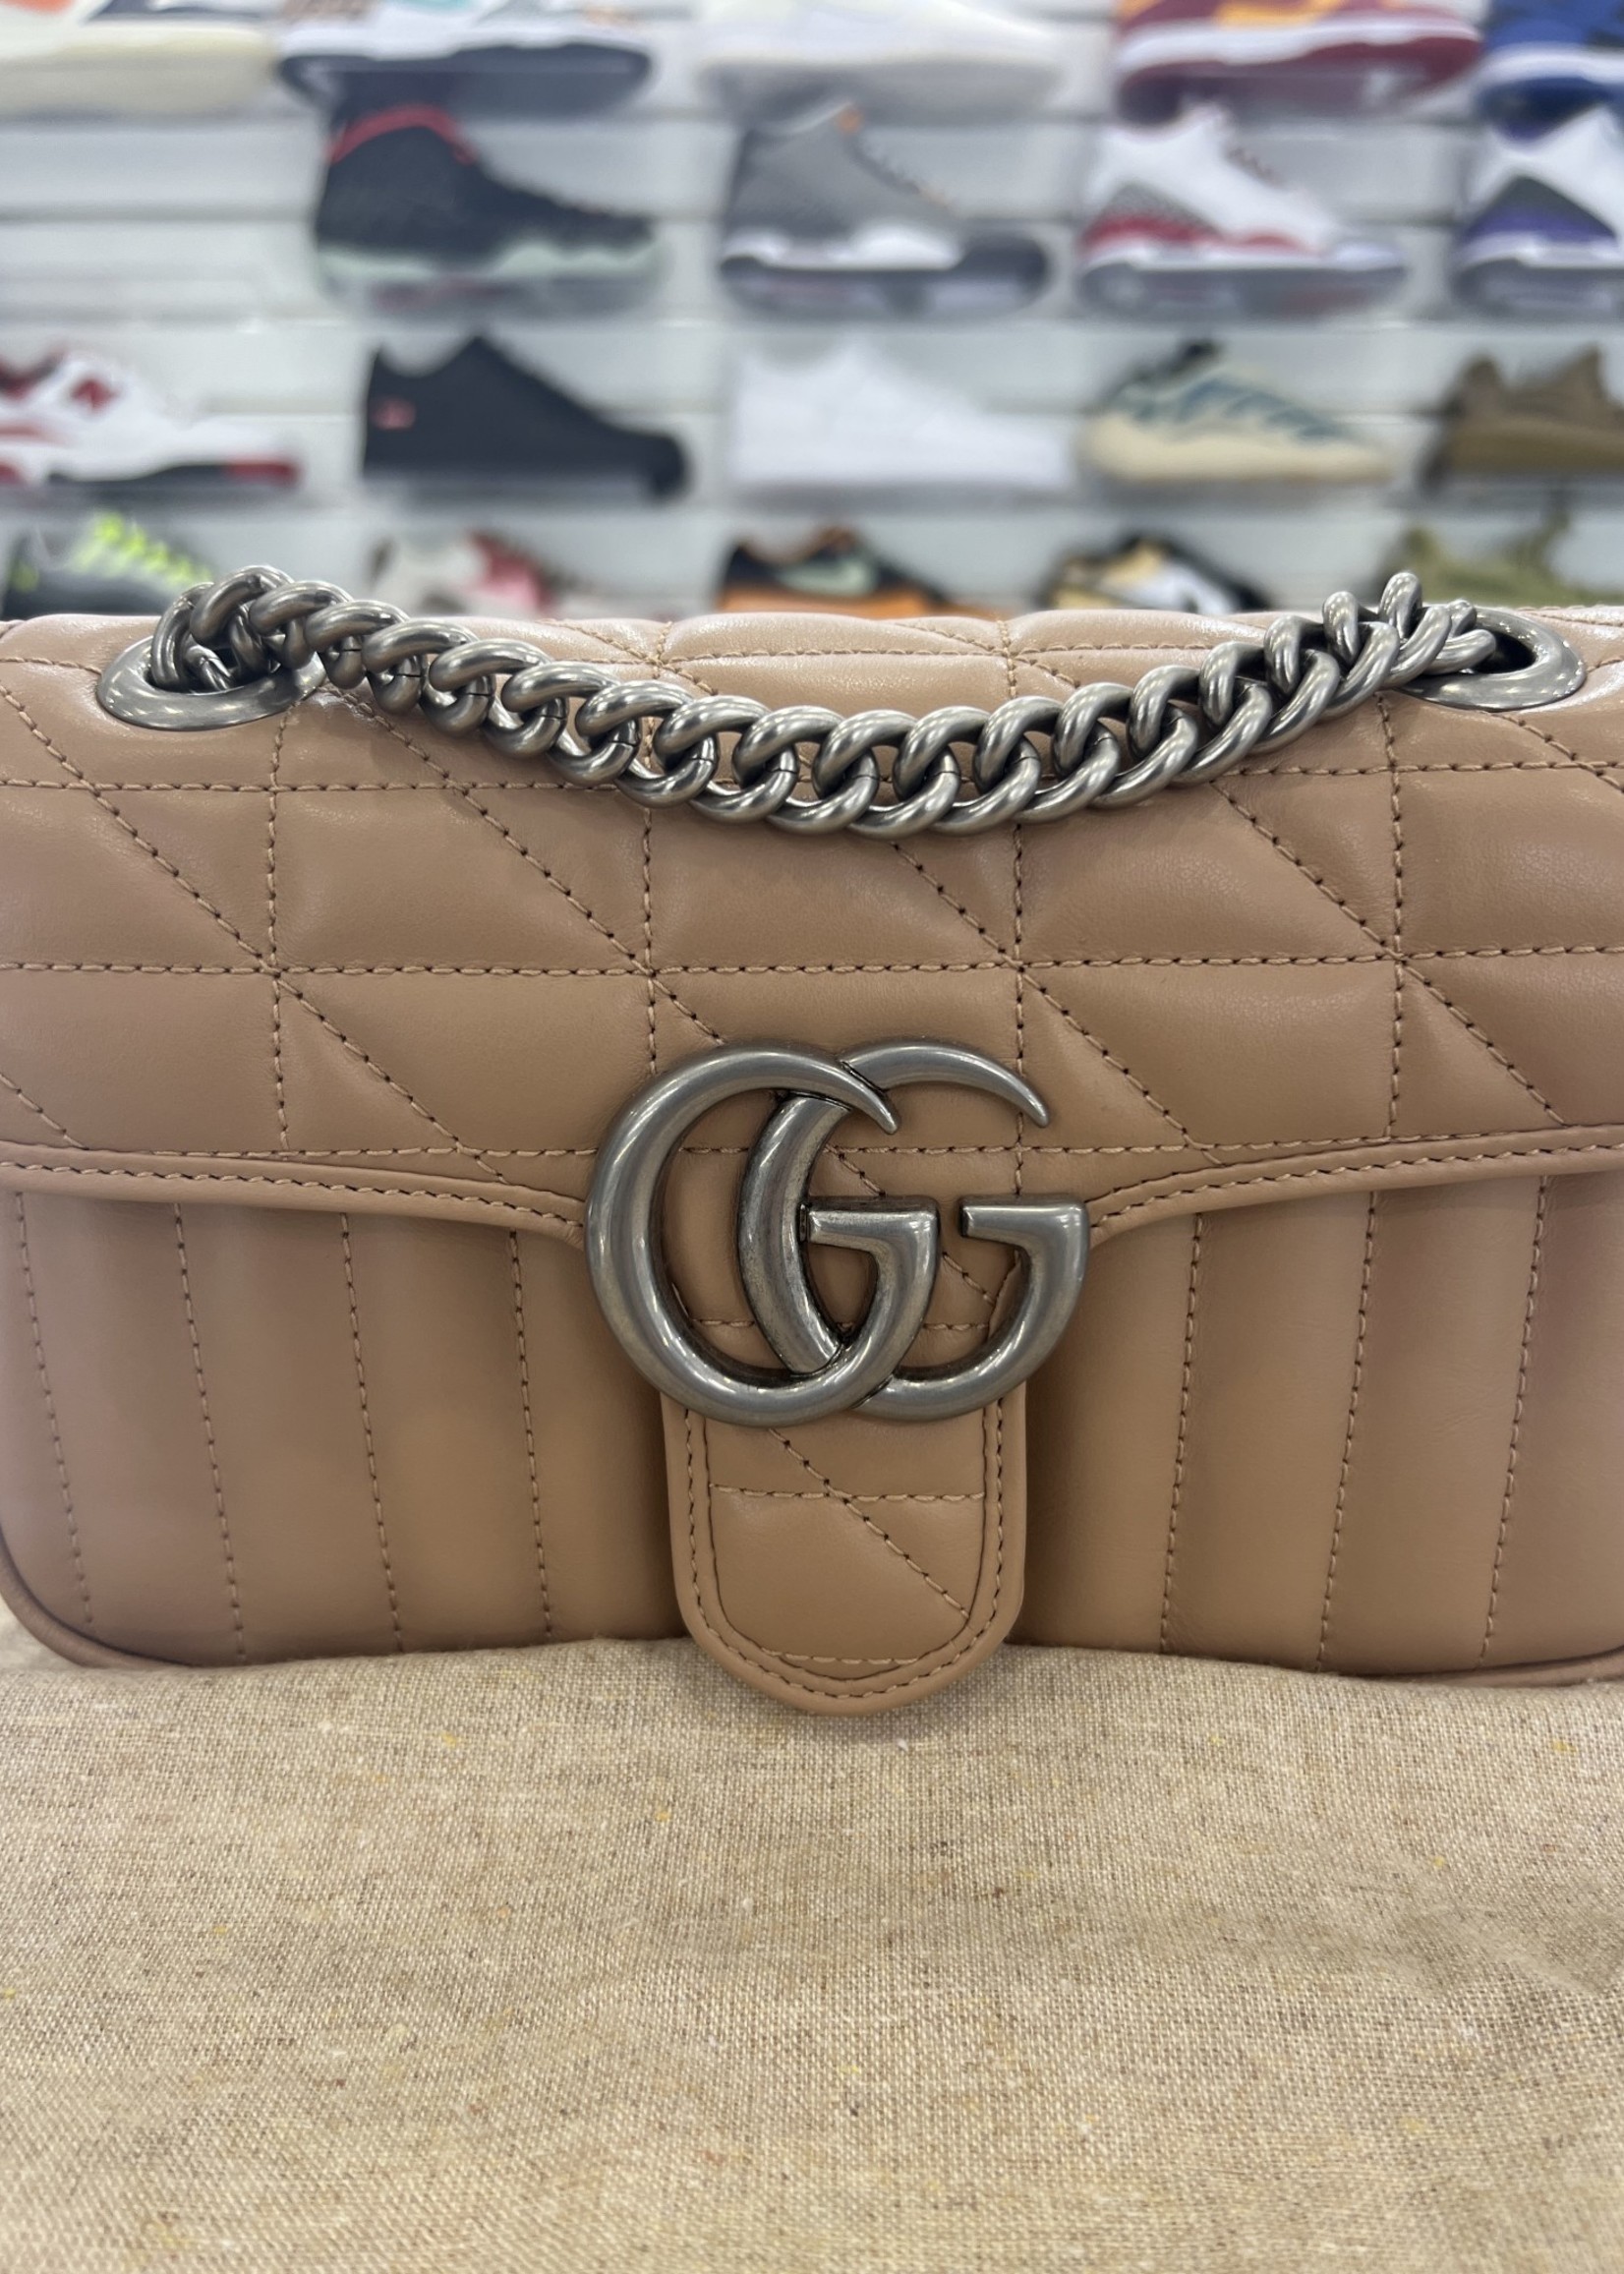 Gucci GUCCI GG MARMONT SMALL SHOULDER BAG BEIGE - NEW